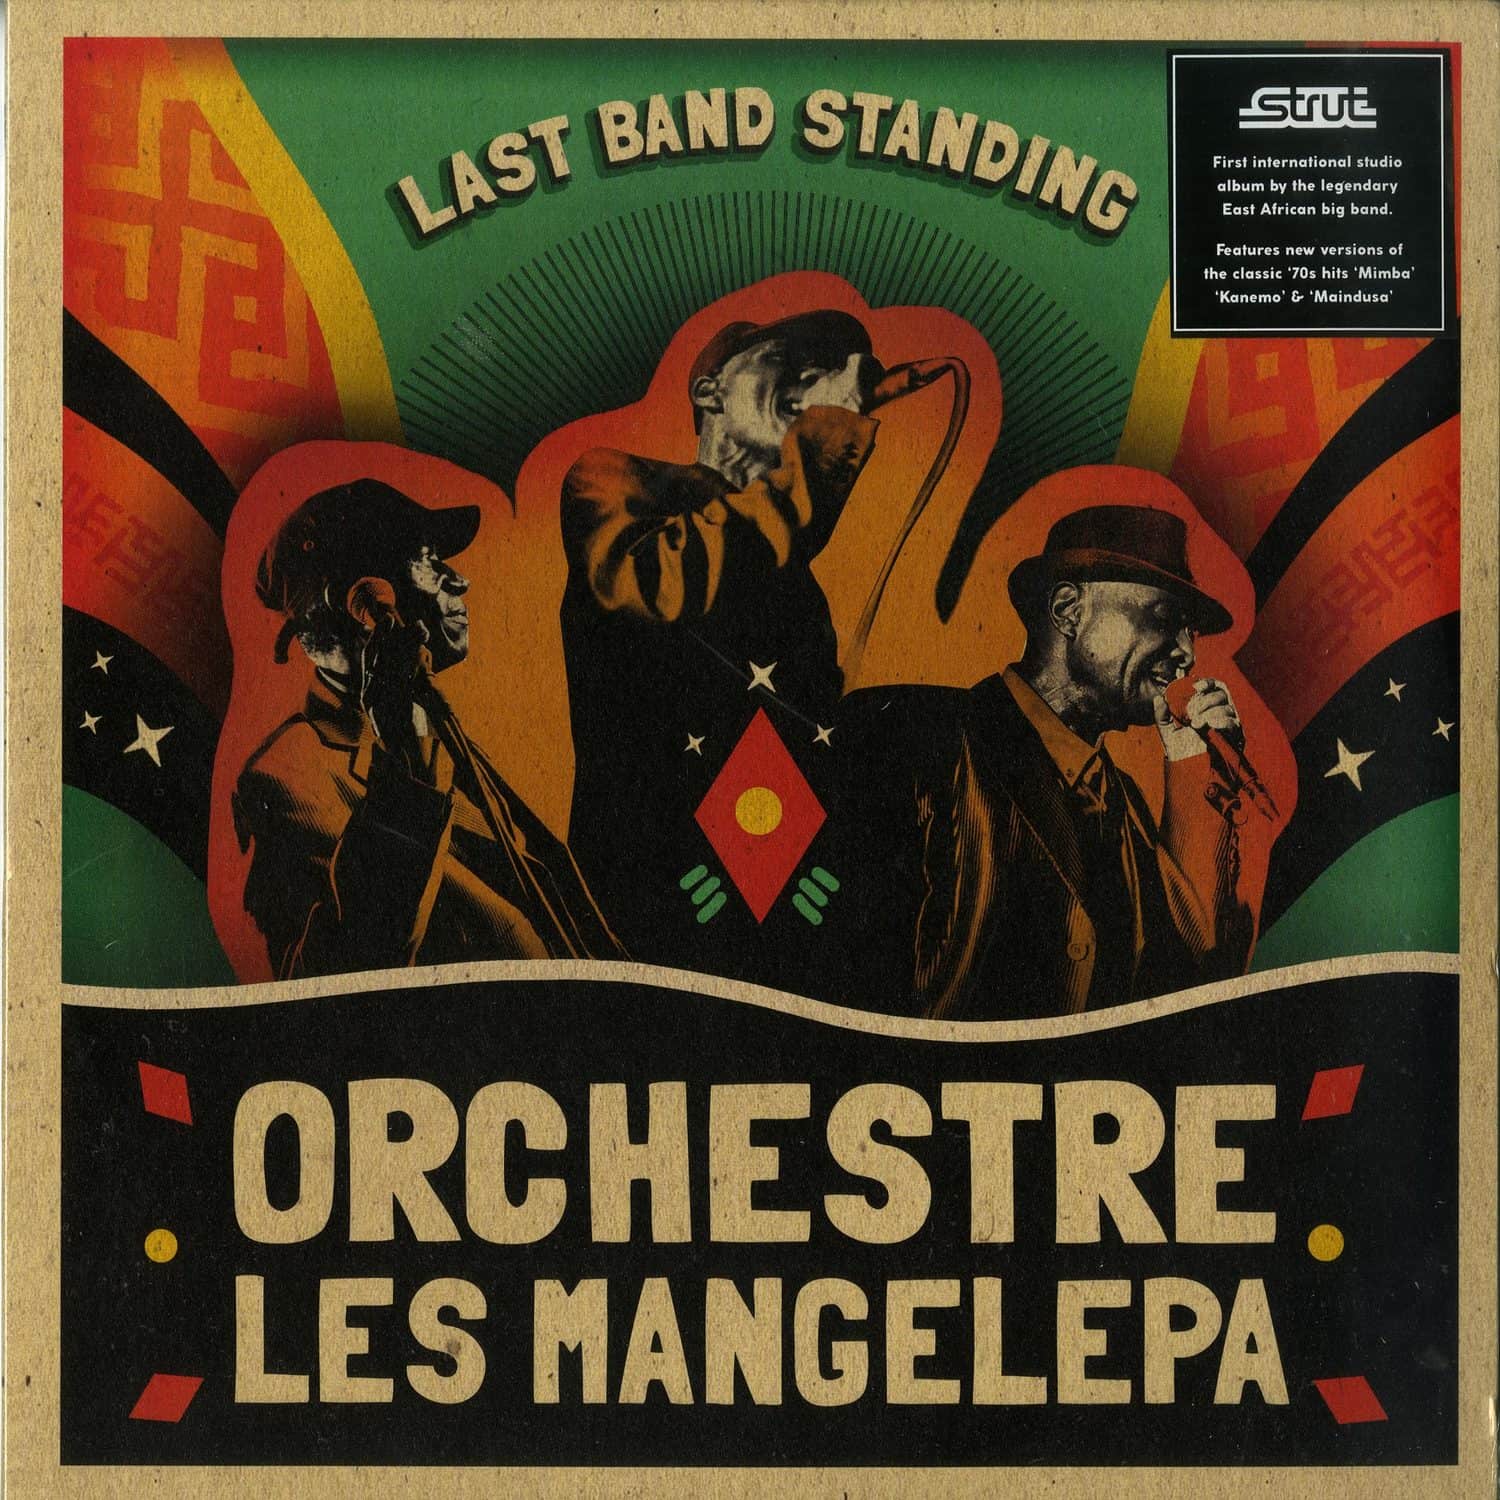 Orchestre Les Mangelepa - LAST BAND STANDING 